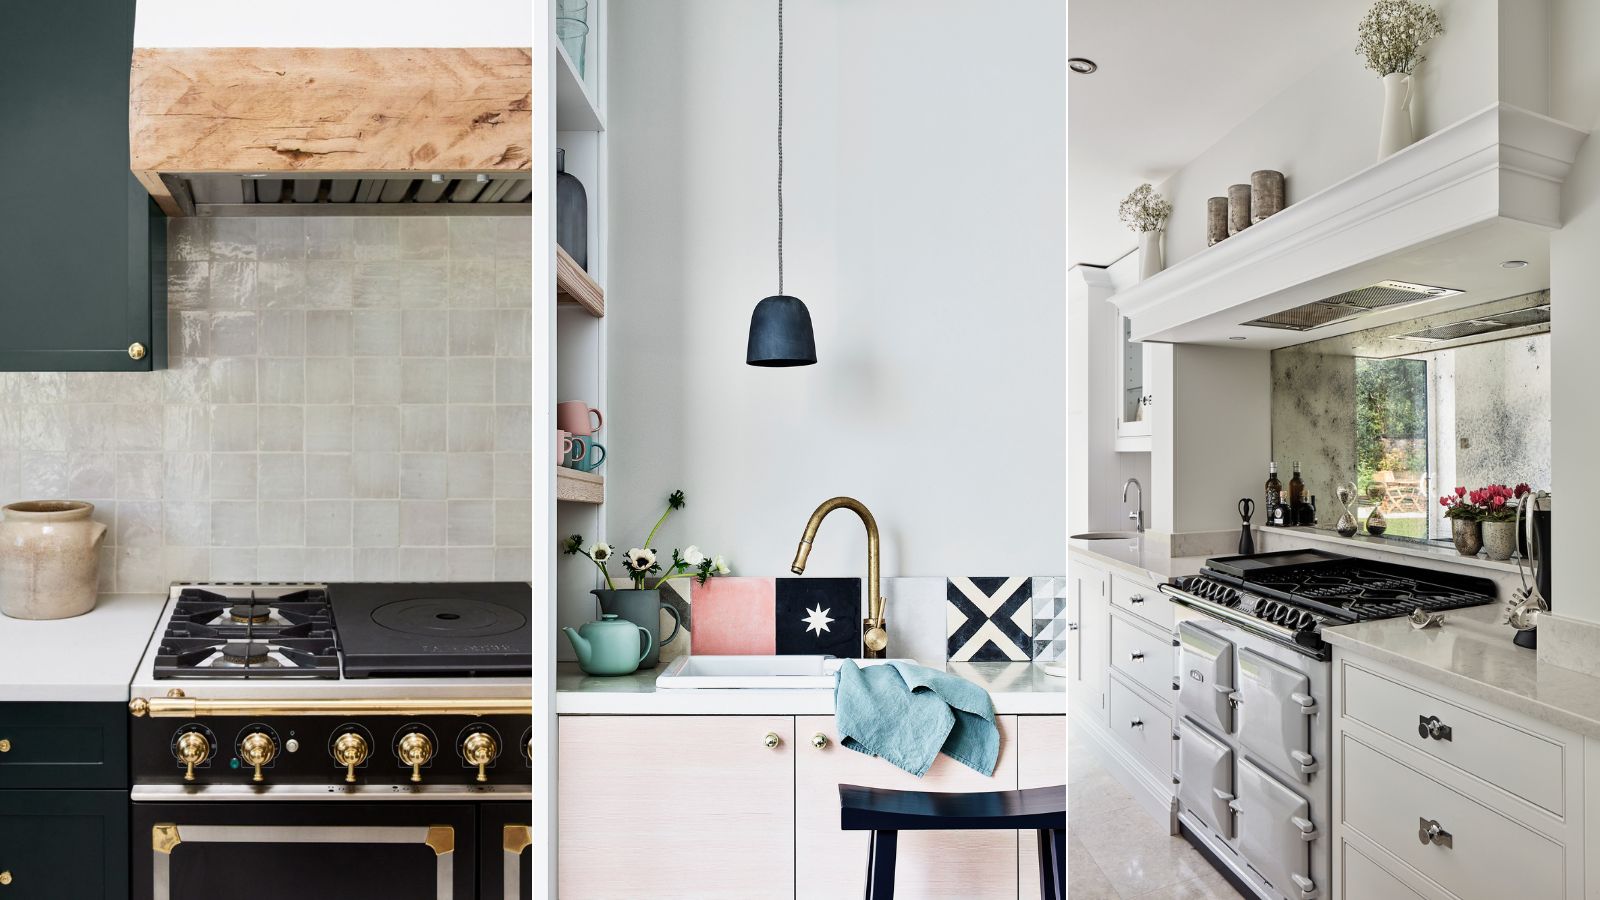 kitchen backsplash ideas: 15 looks and design advice |